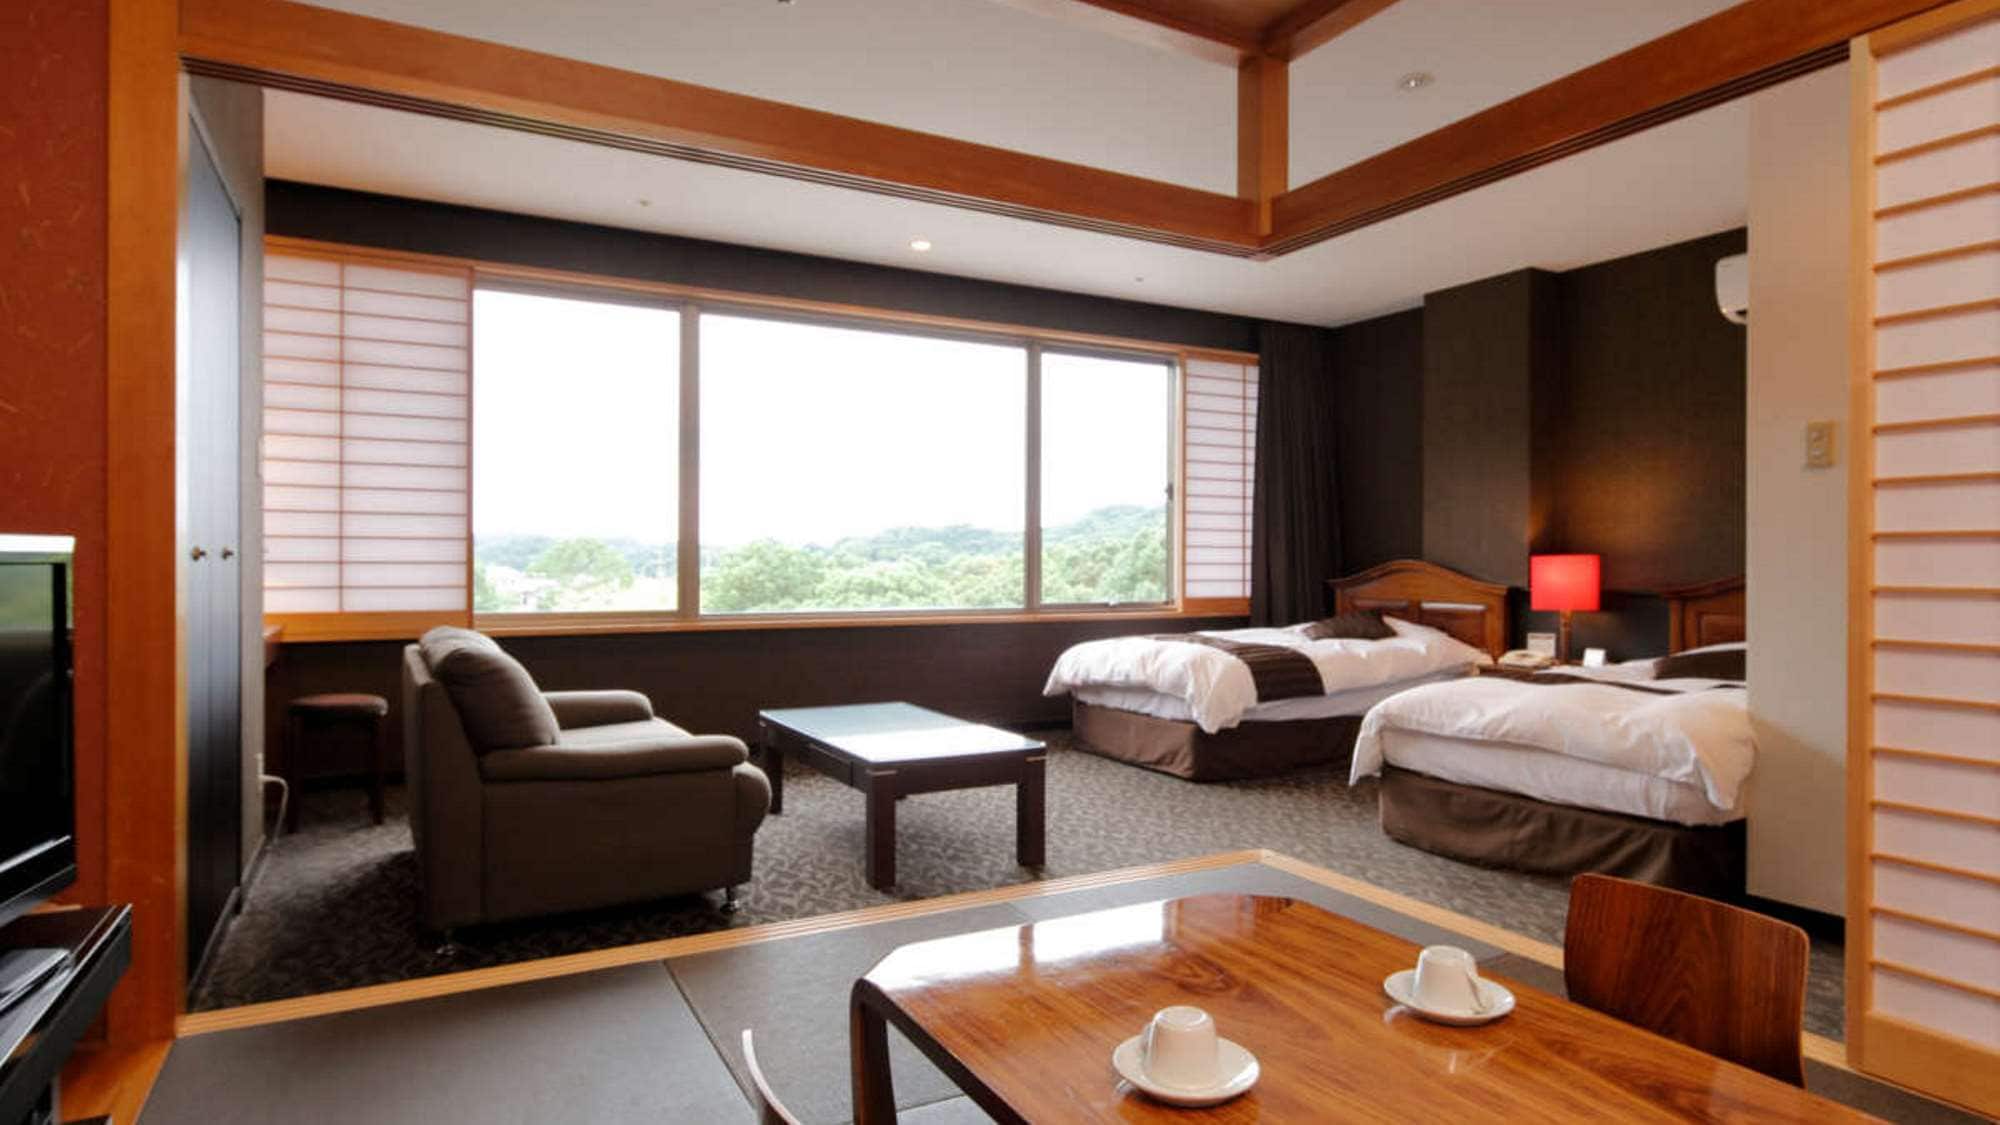 Japanese-Western style semi-suite (48㎡) Japanese-style room and Western-style room with 6 tatami mats.